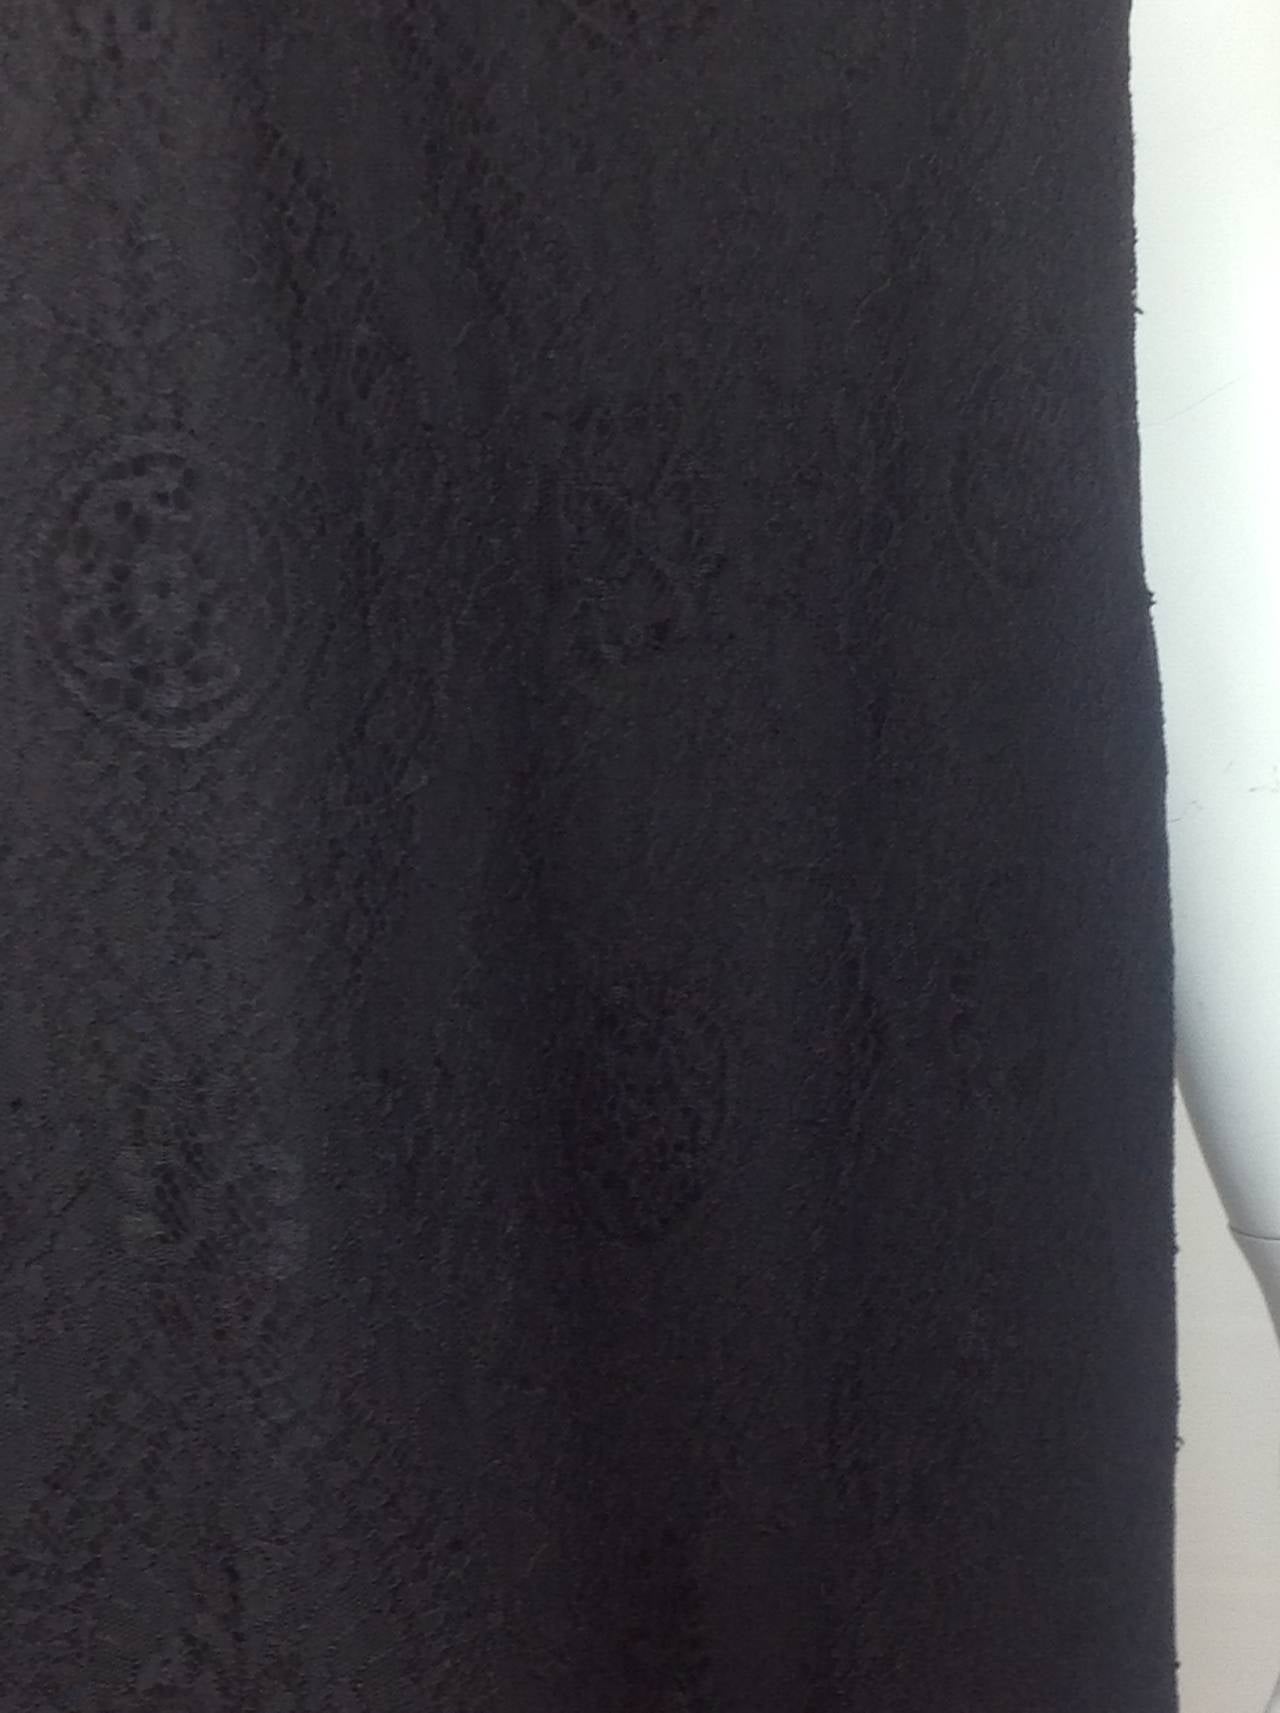 Gorgeous Ralph Rucci black lace sheath dress         Size S 2